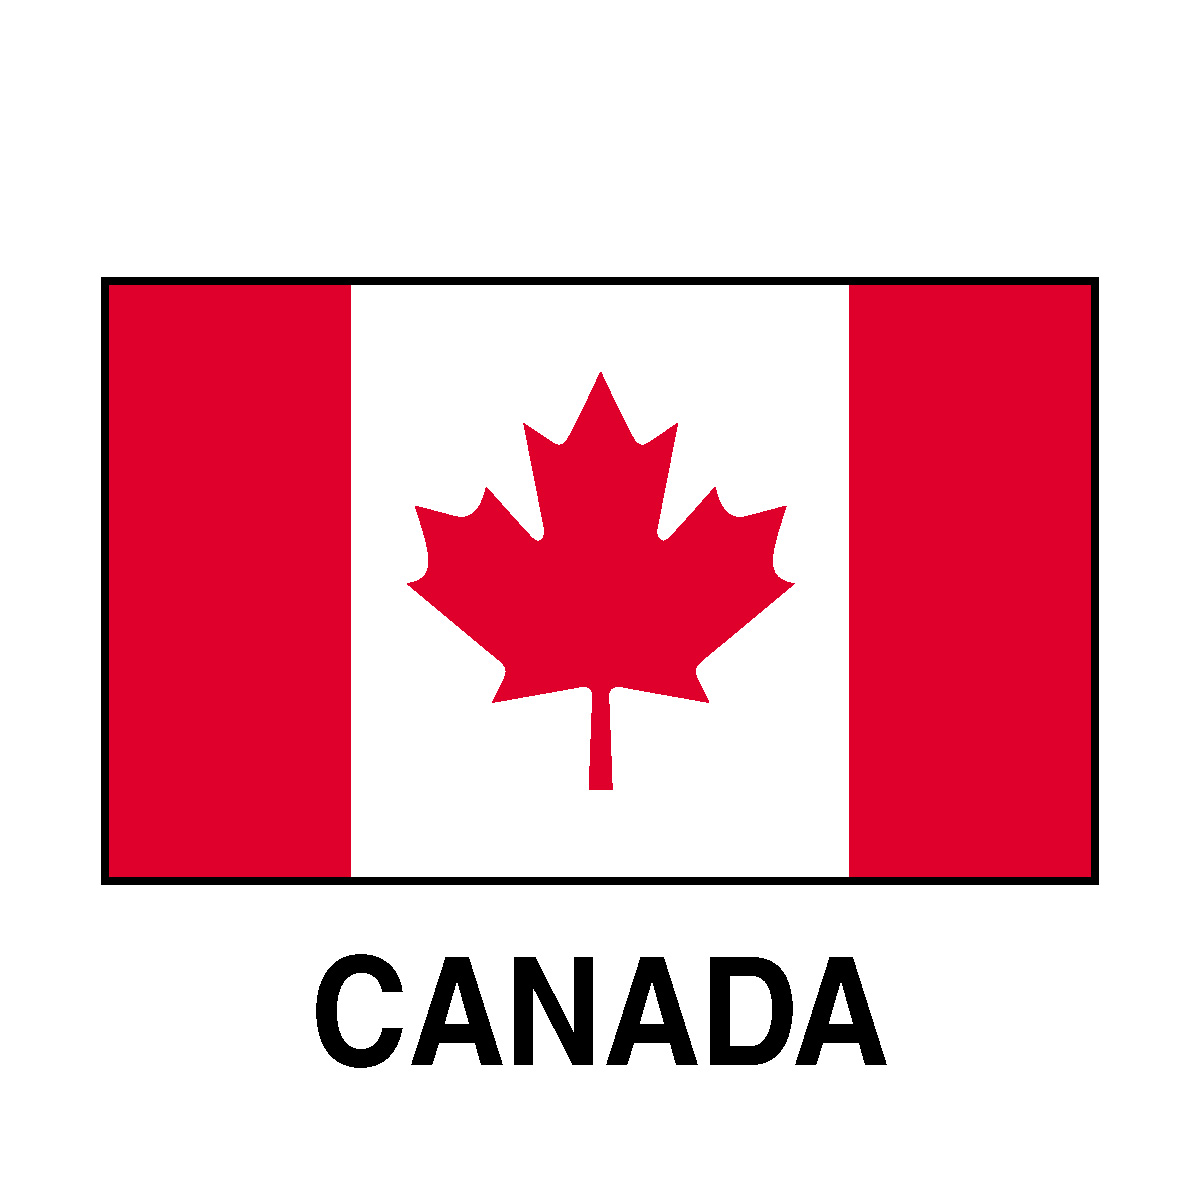 Canada flag images clip art dromfed top